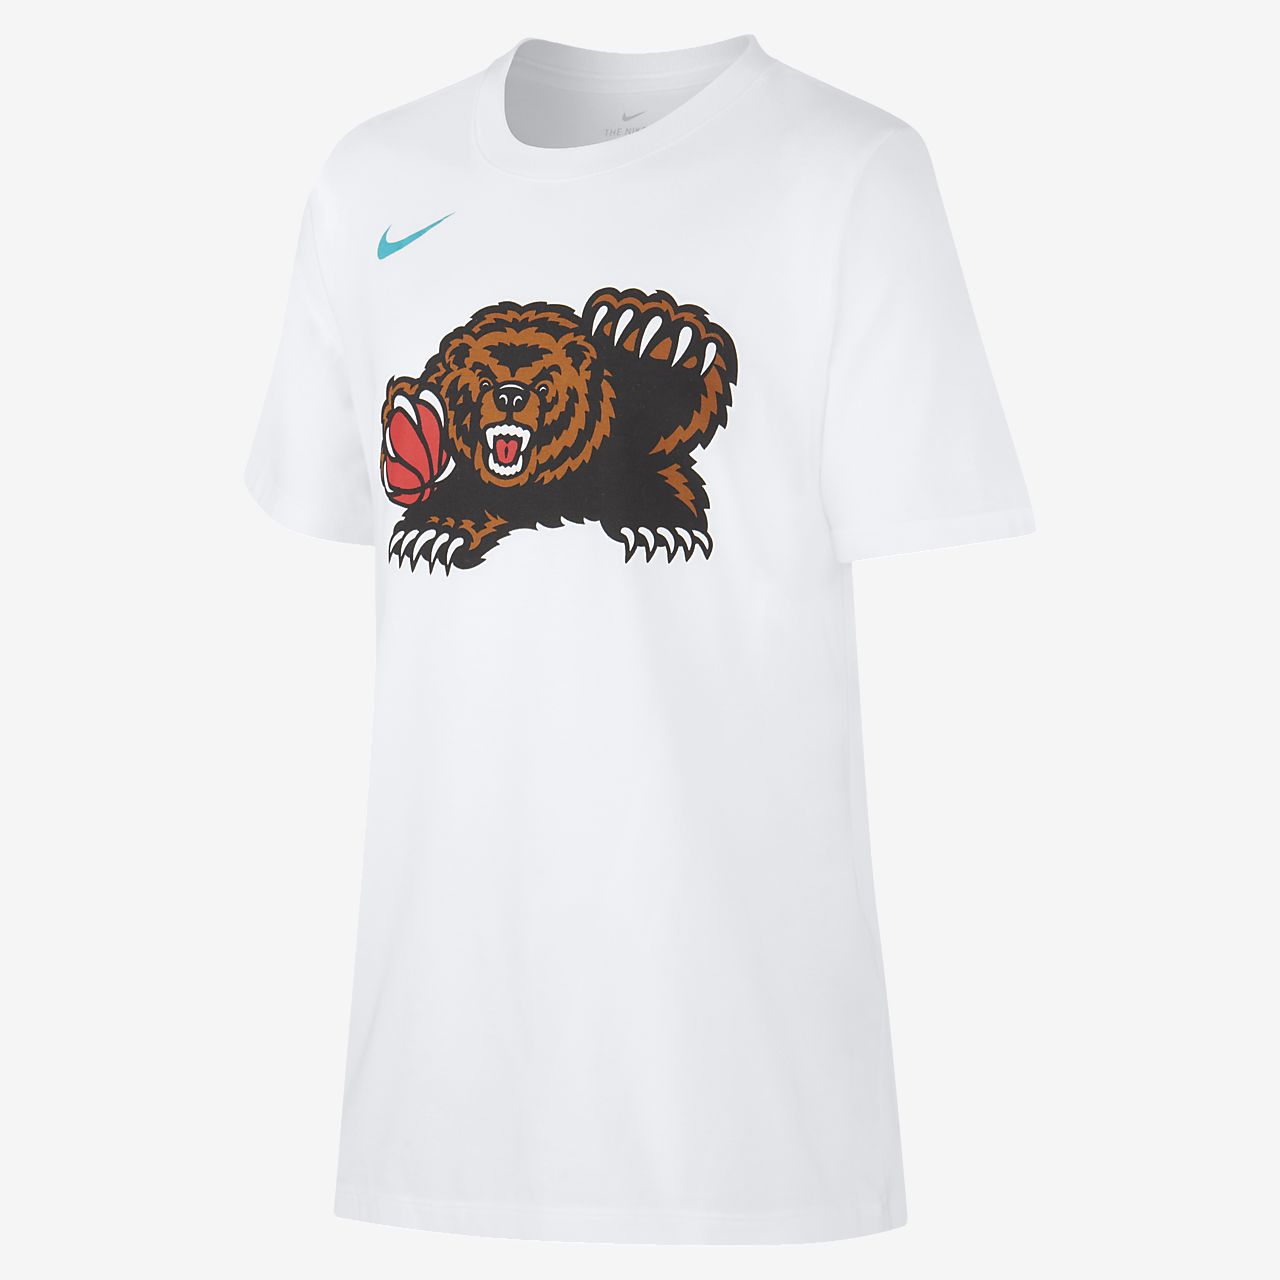 memphis tigers grizzlies shirt